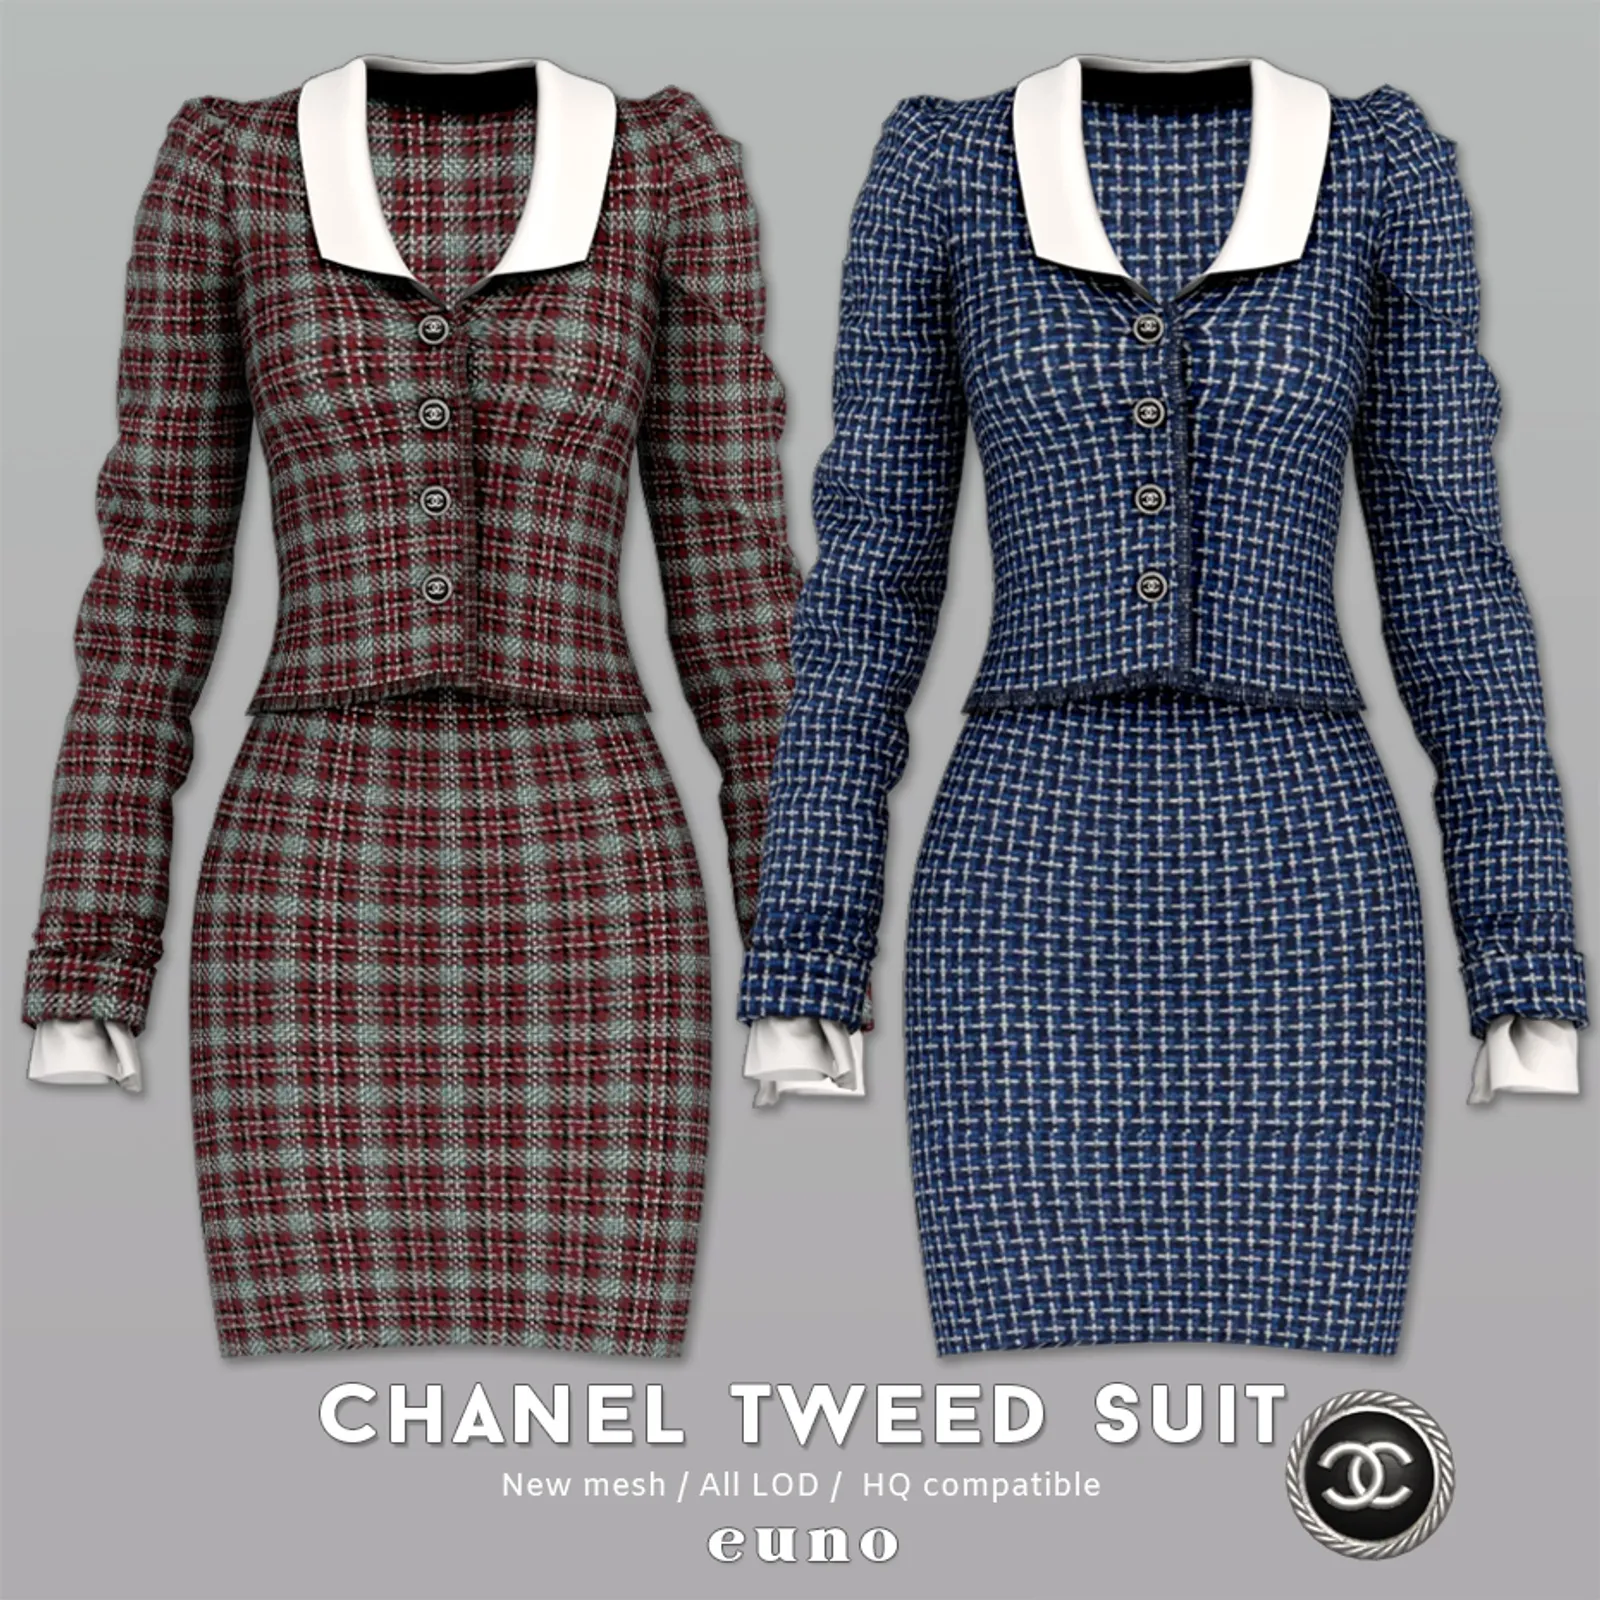 Chanel Tweed Suit